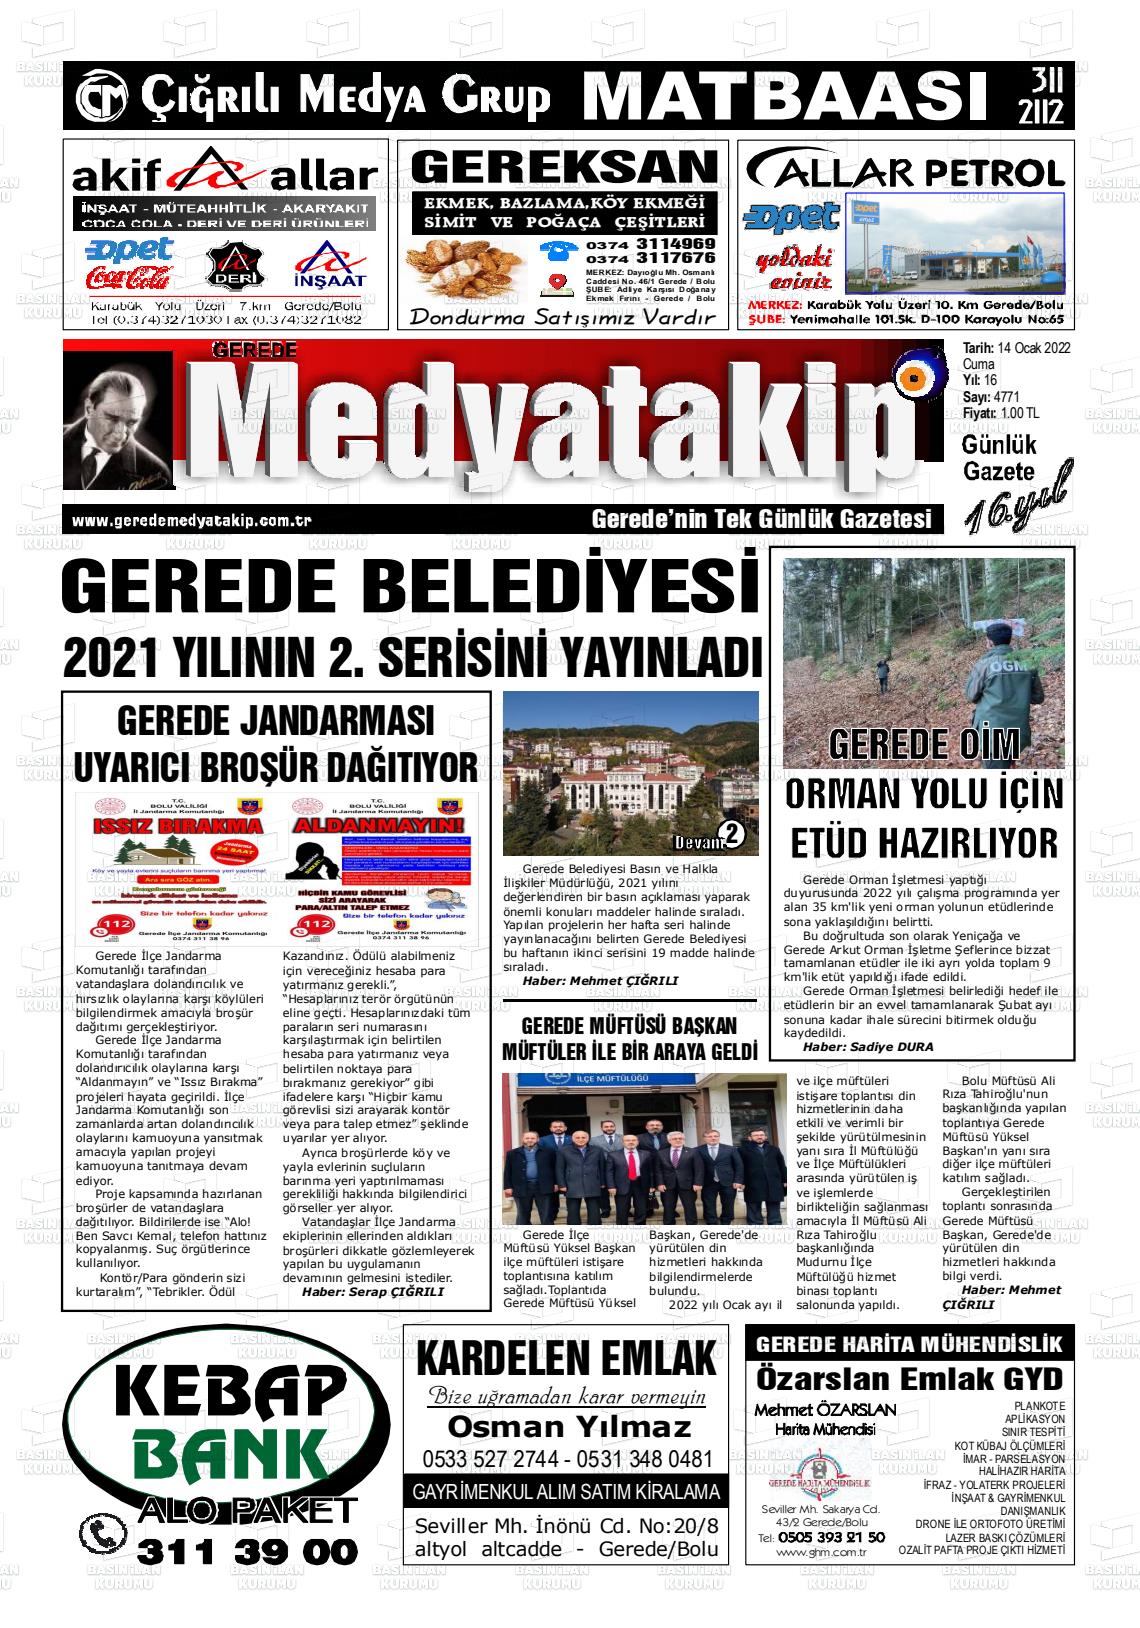 14 Ocak 2022 Gerede Medya Takip Gazete Manşeti